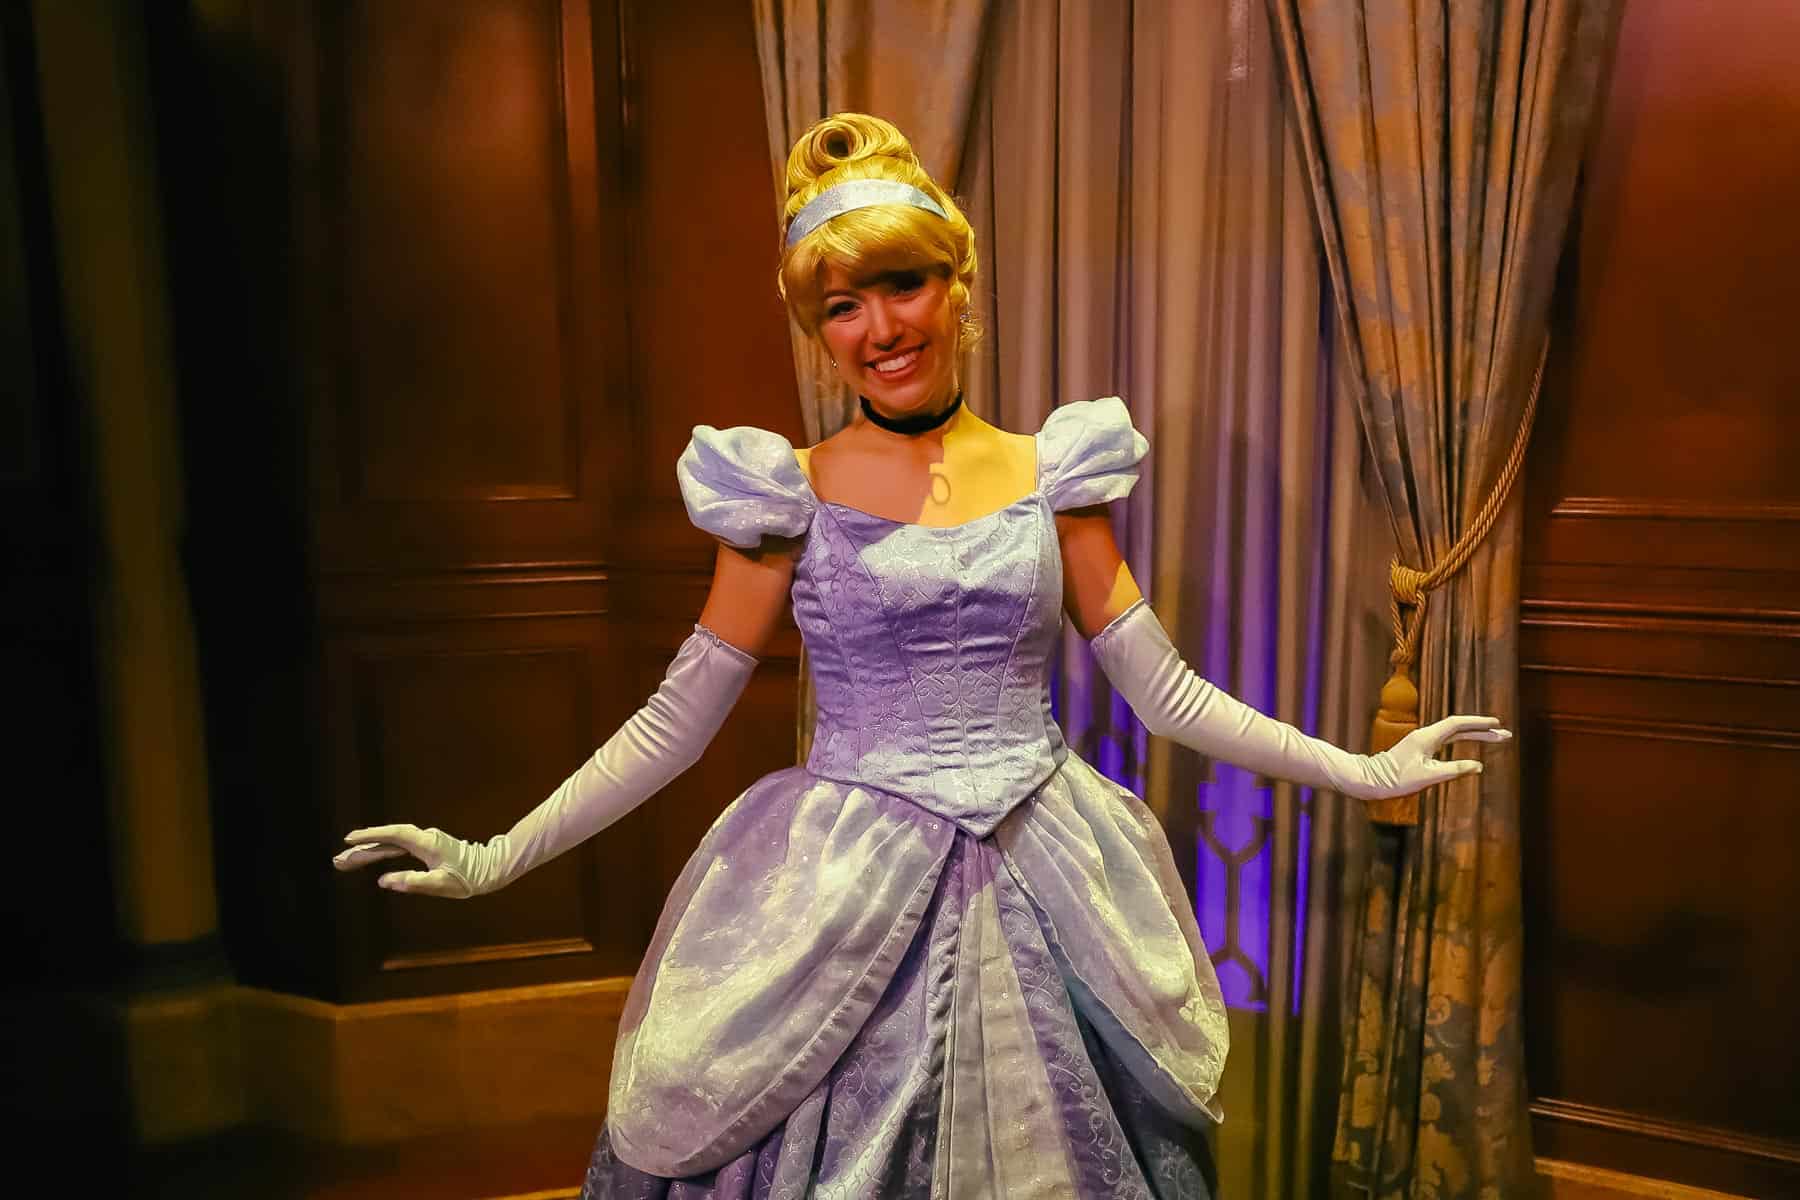 Cinderella posing for a photo at Magic Kingdom.